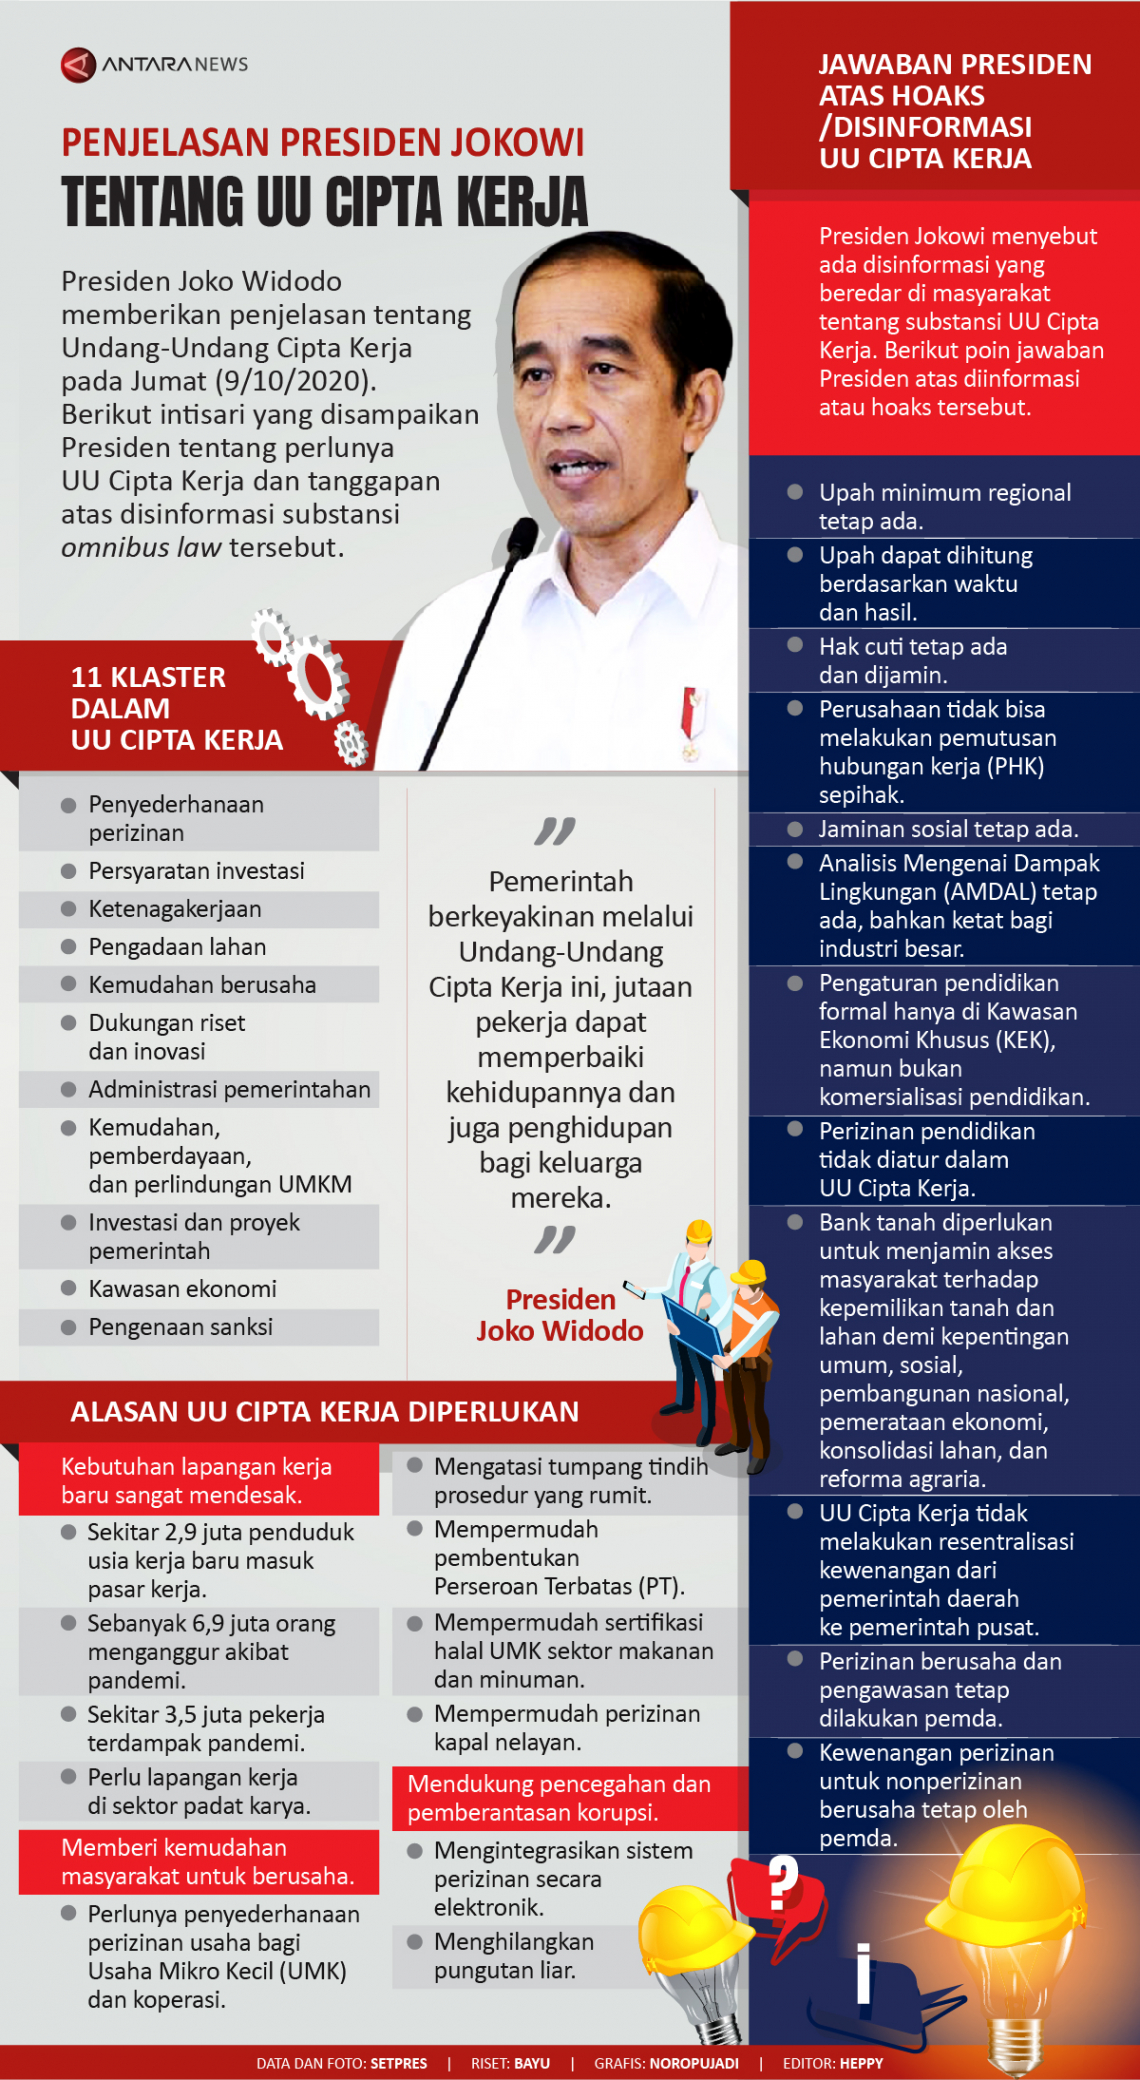 Penjelasan Presiden Jokowi tentang UU Cipta Kerja